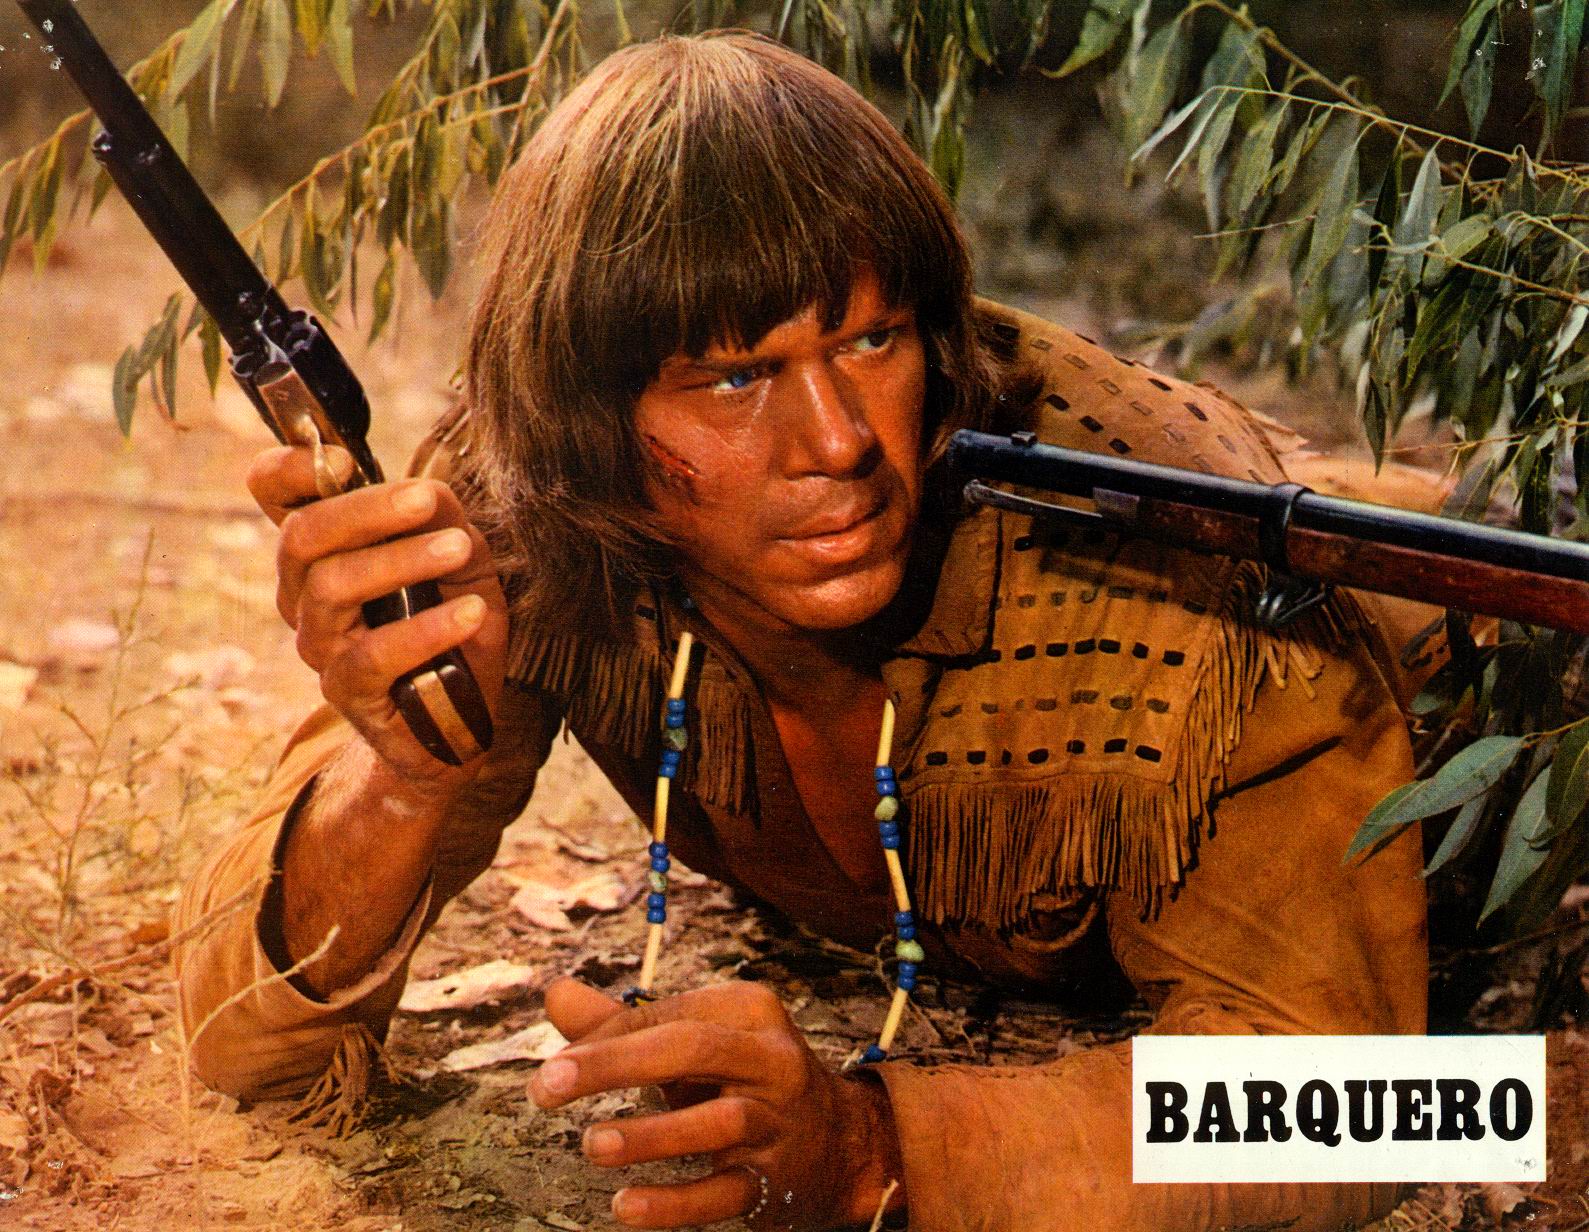 Barquero (1969) Gordon Douglas - Barquero (22.07.1969 / 1969)